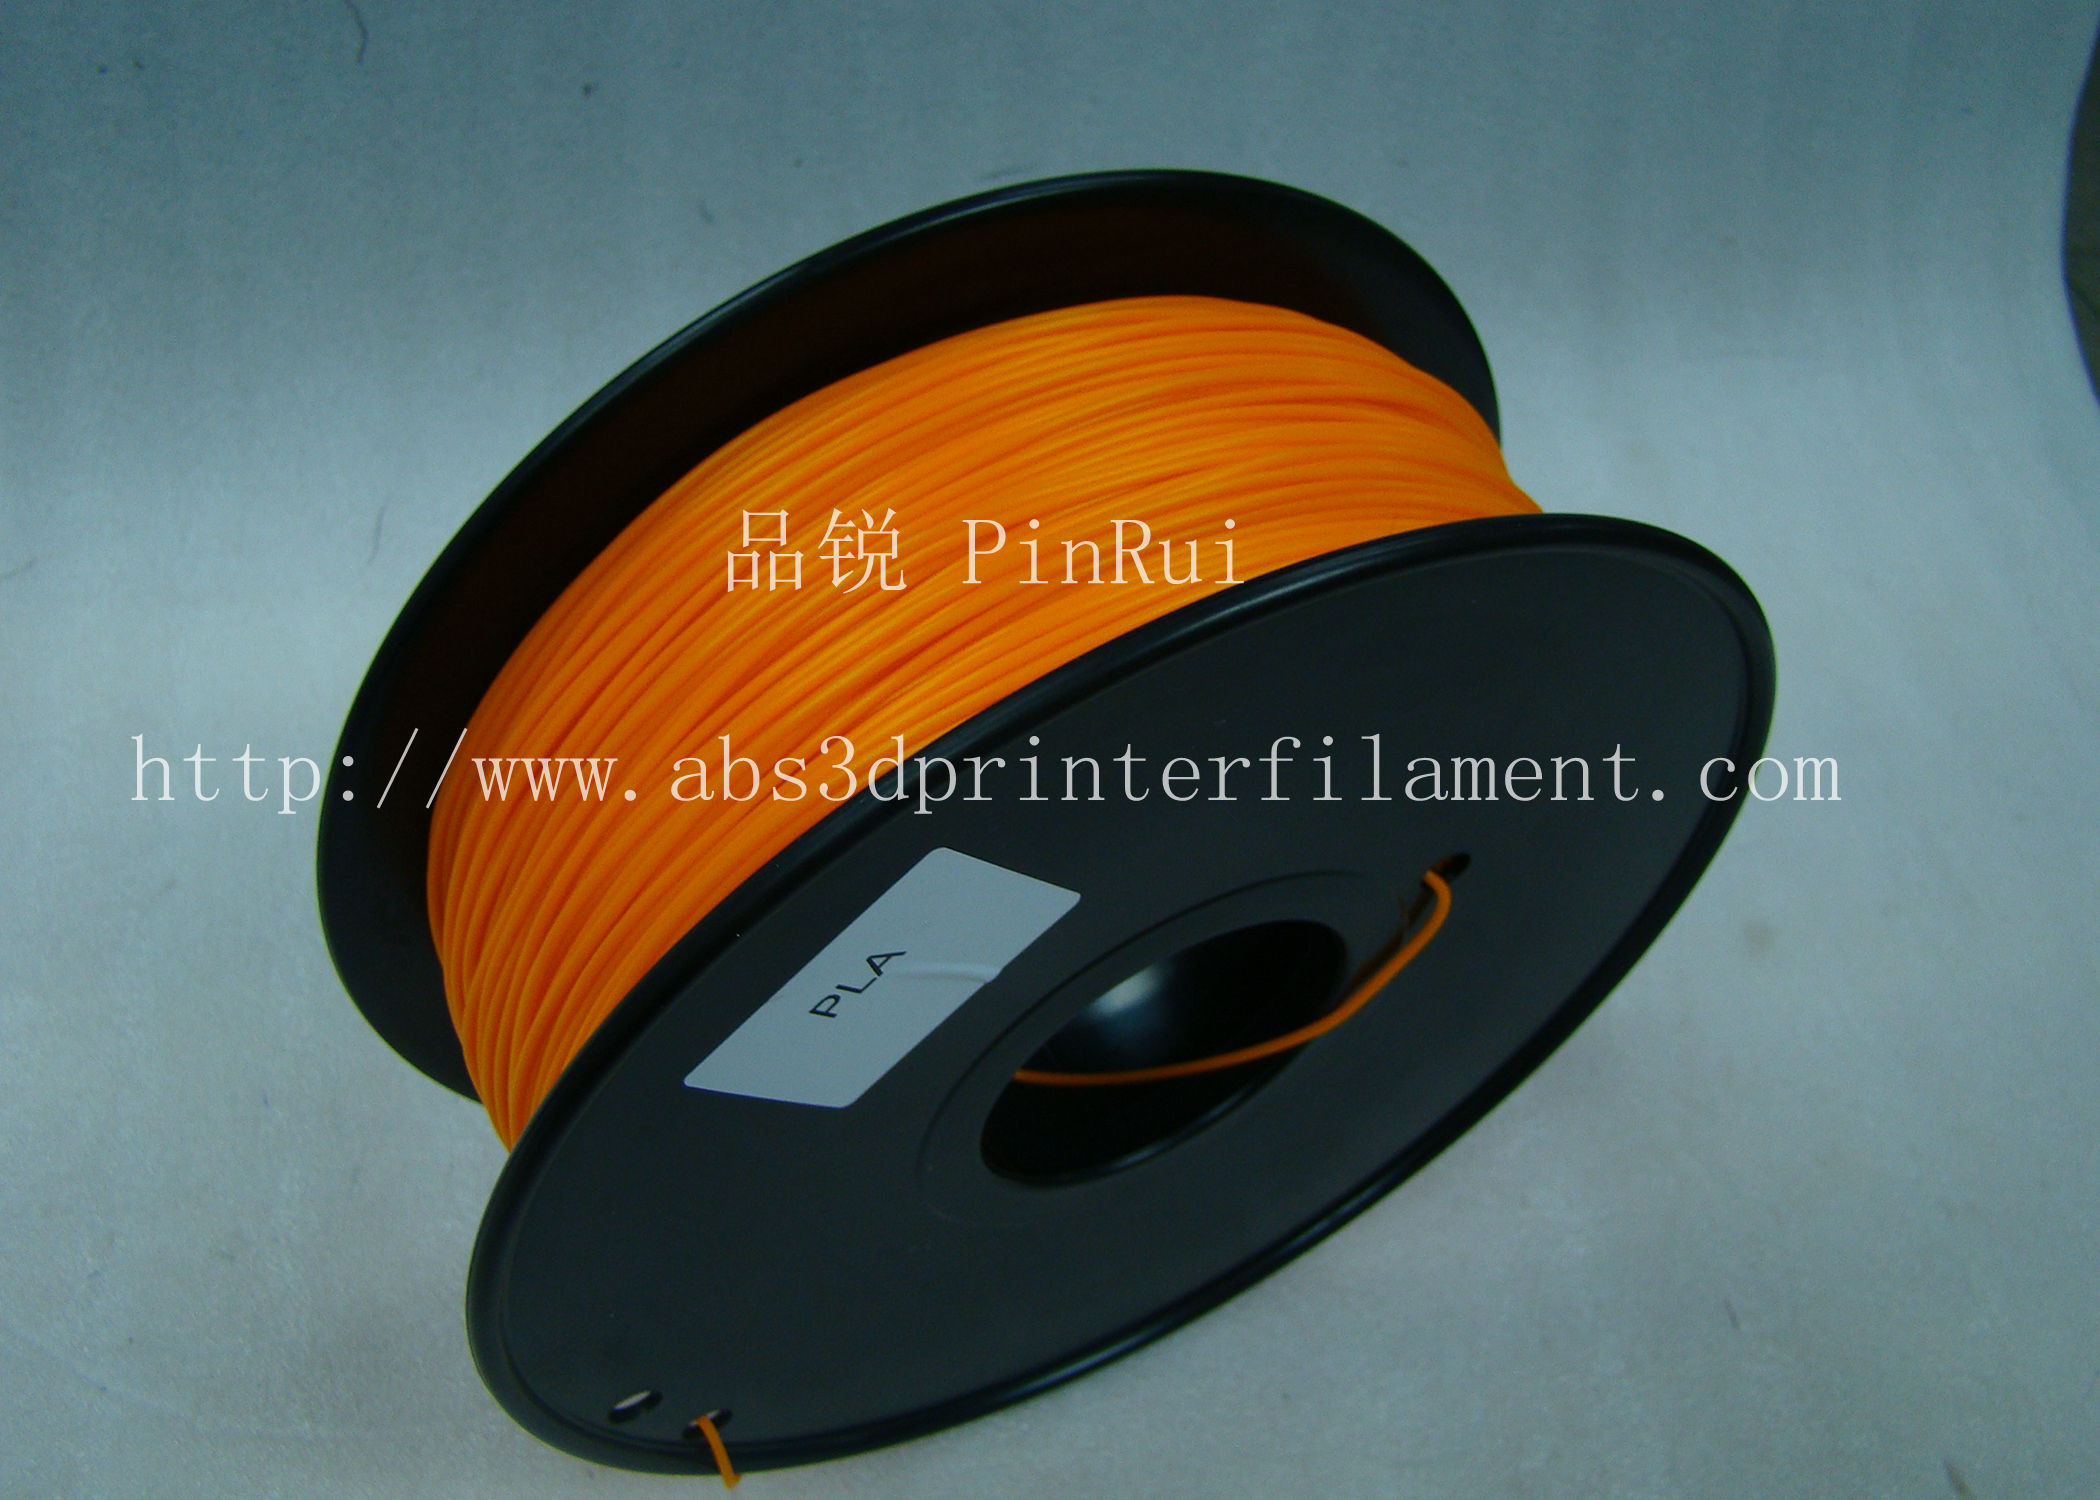 China Biodegradable Orange PLA 3d Printer Filament 1.75mm Materials For 3D Printing factory